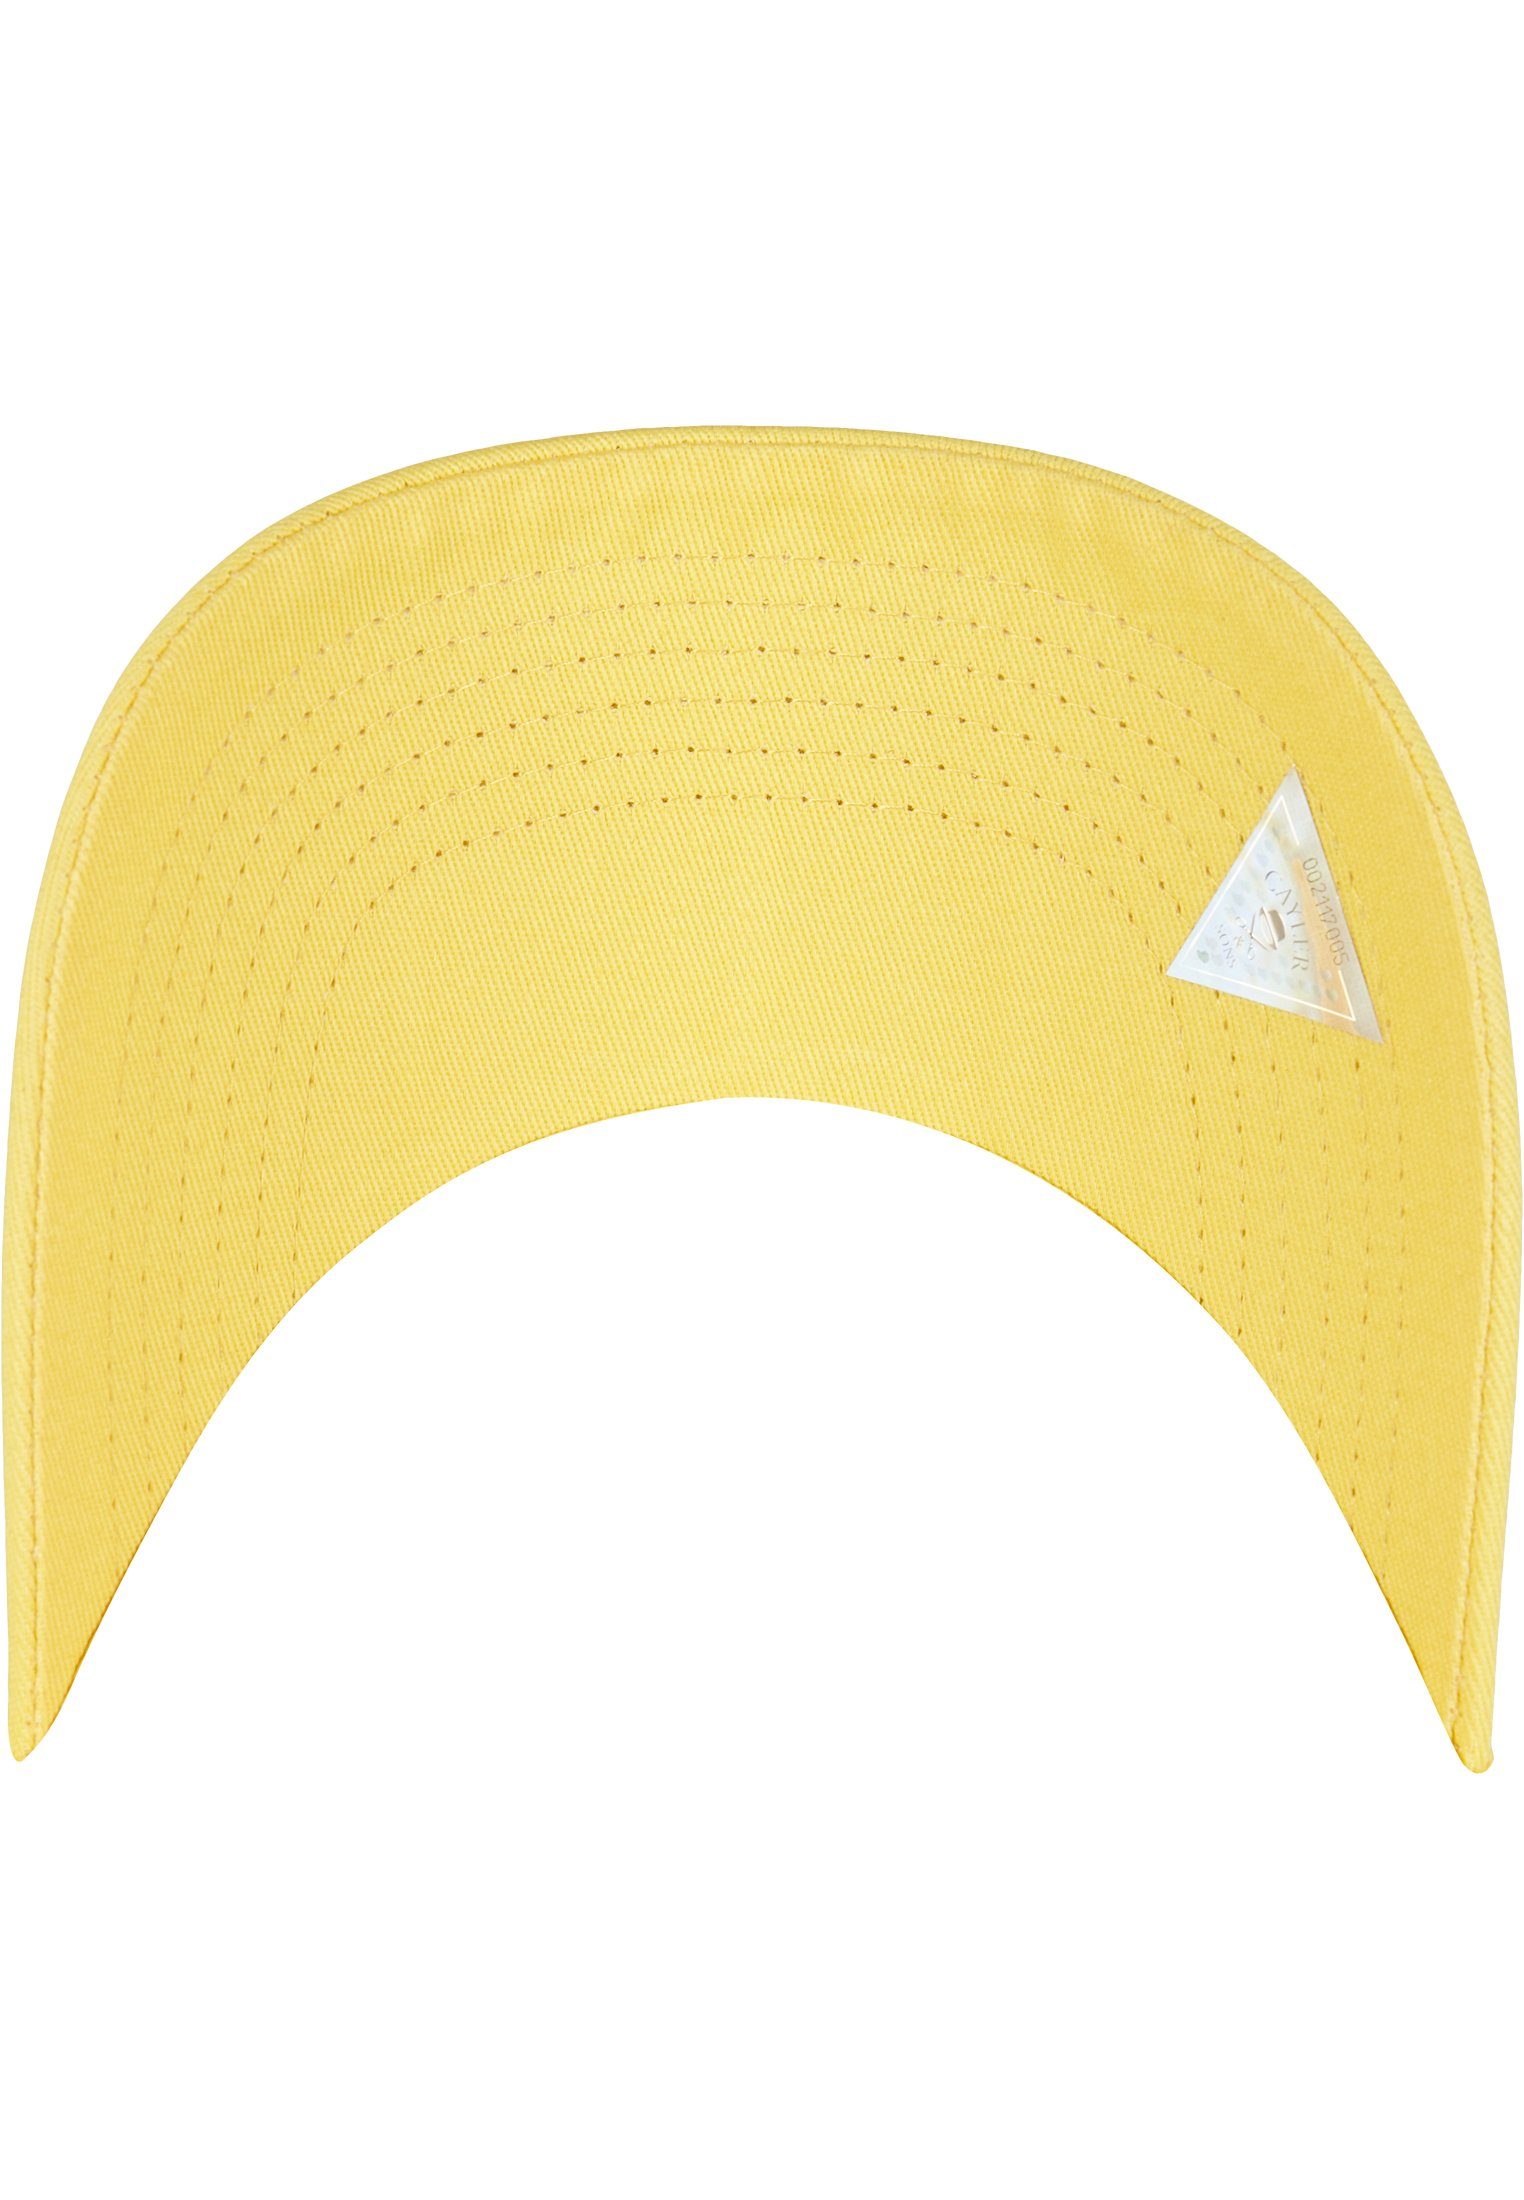 CAYLER & yellow/multicolor Flex Peace SONS Cap Cap C&S Iconic Curved